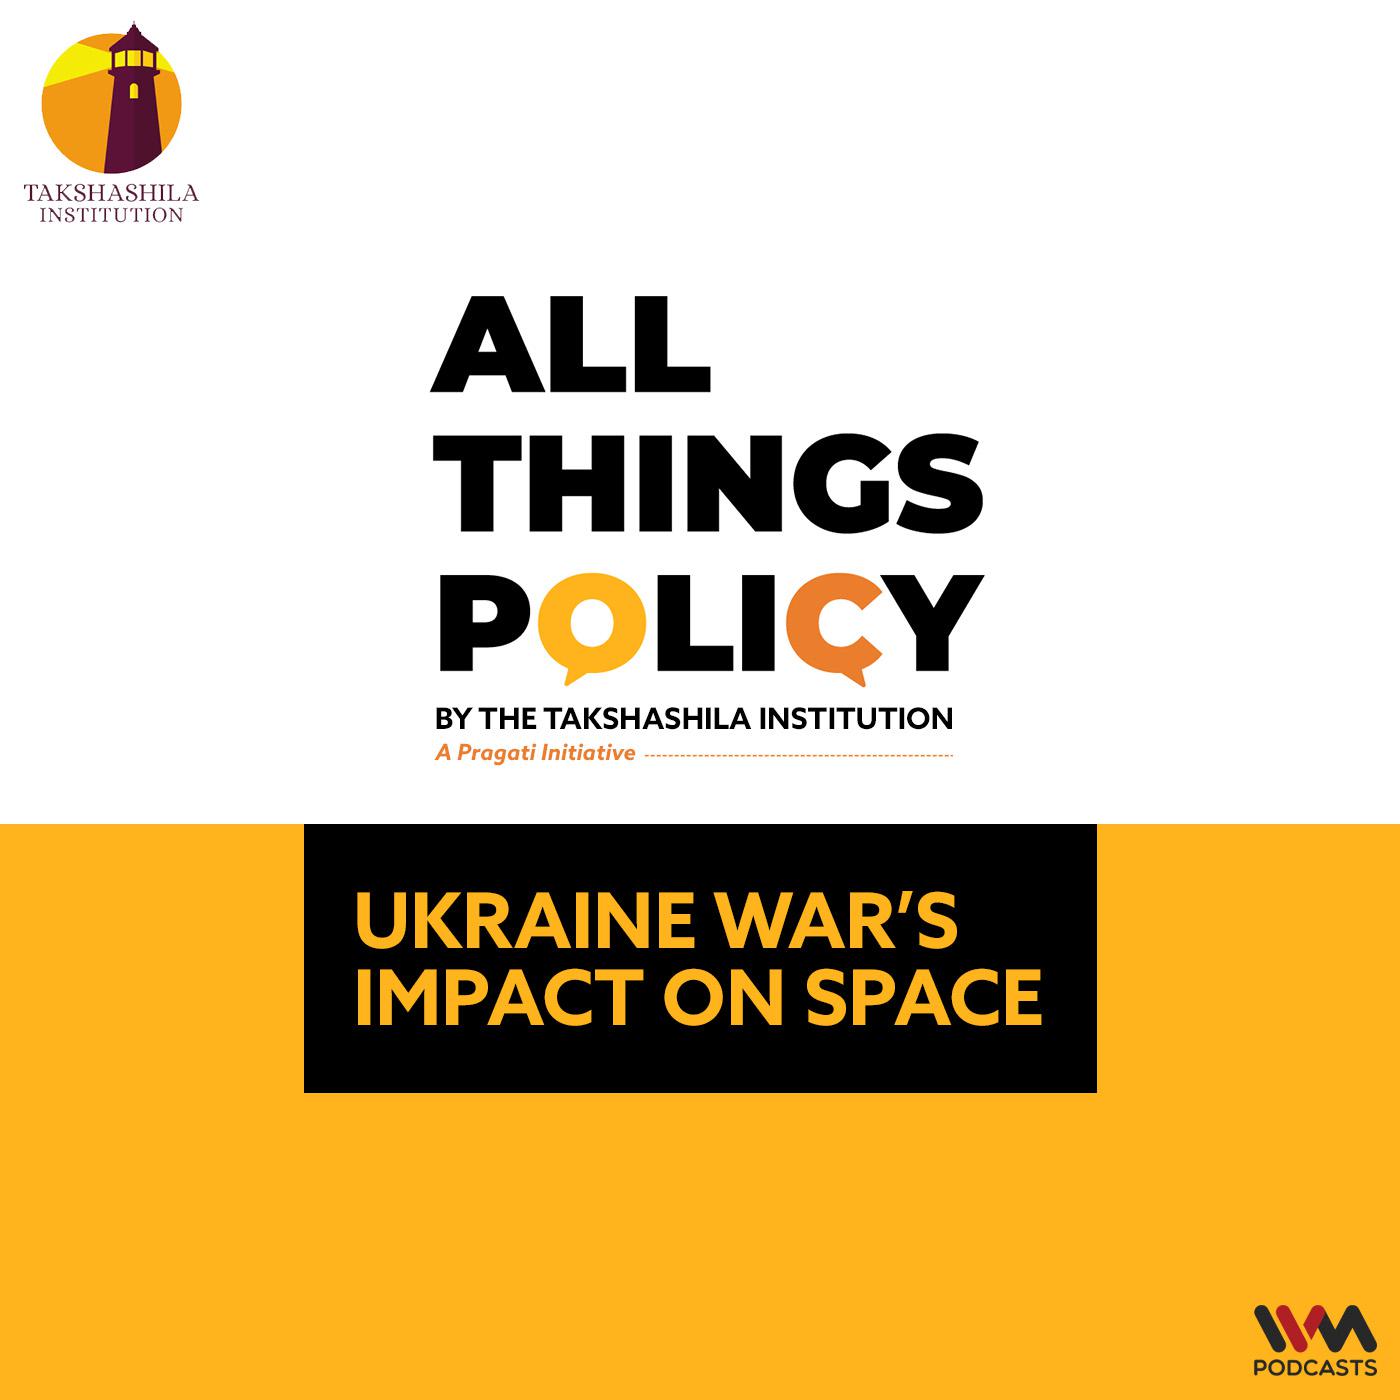 Ukraine War’s Impact on Space